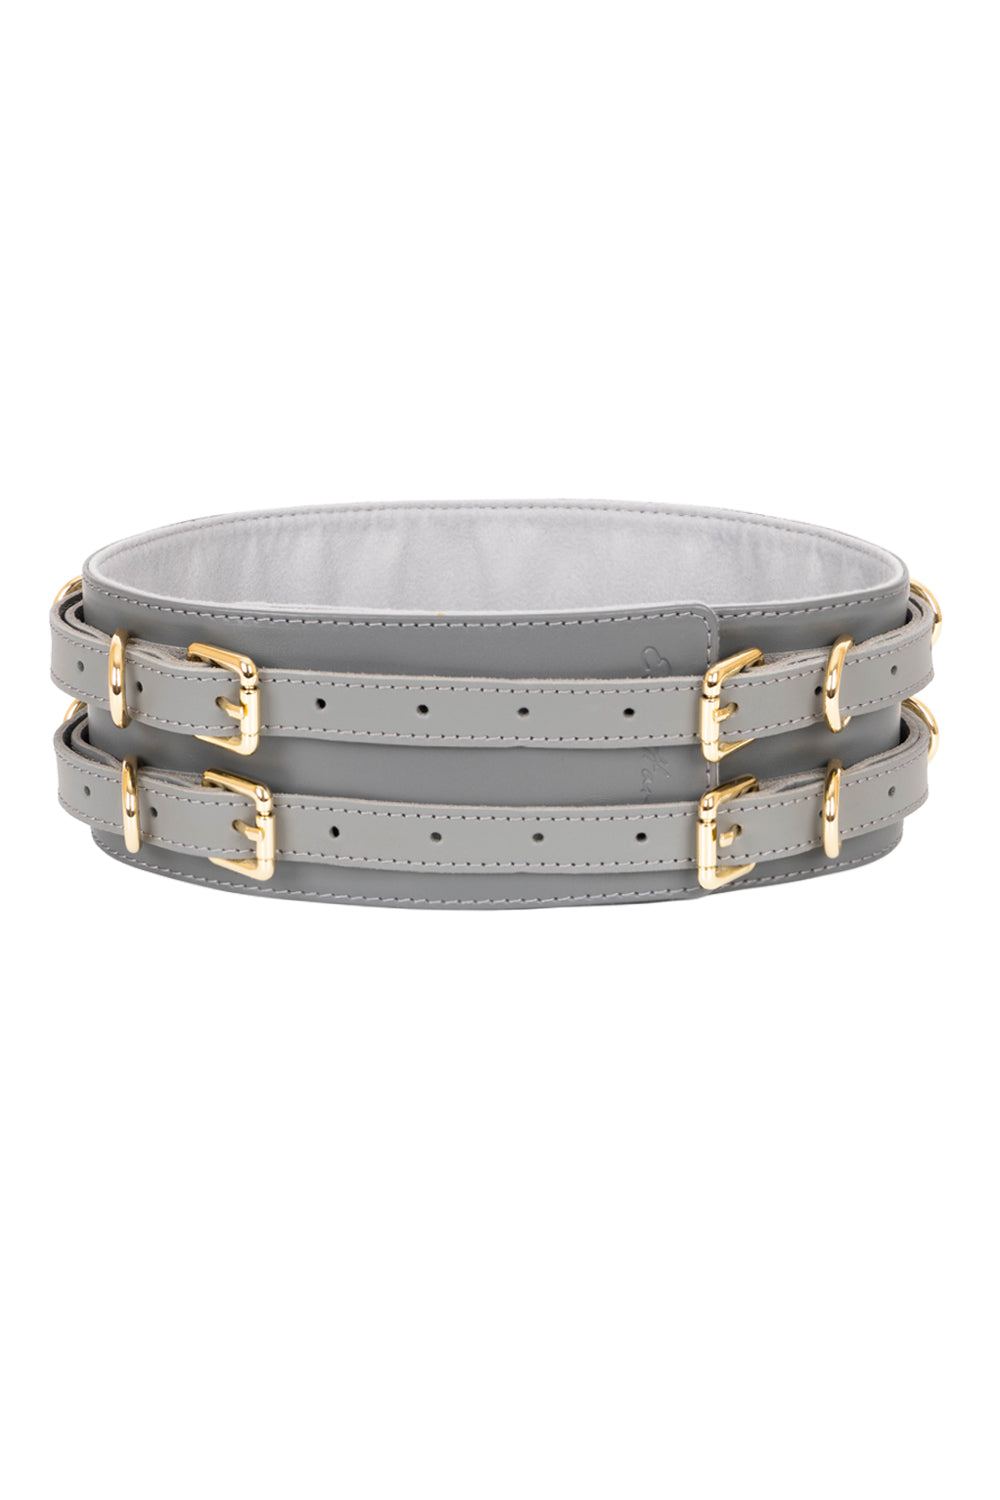 Leather Waist Belt. Gray